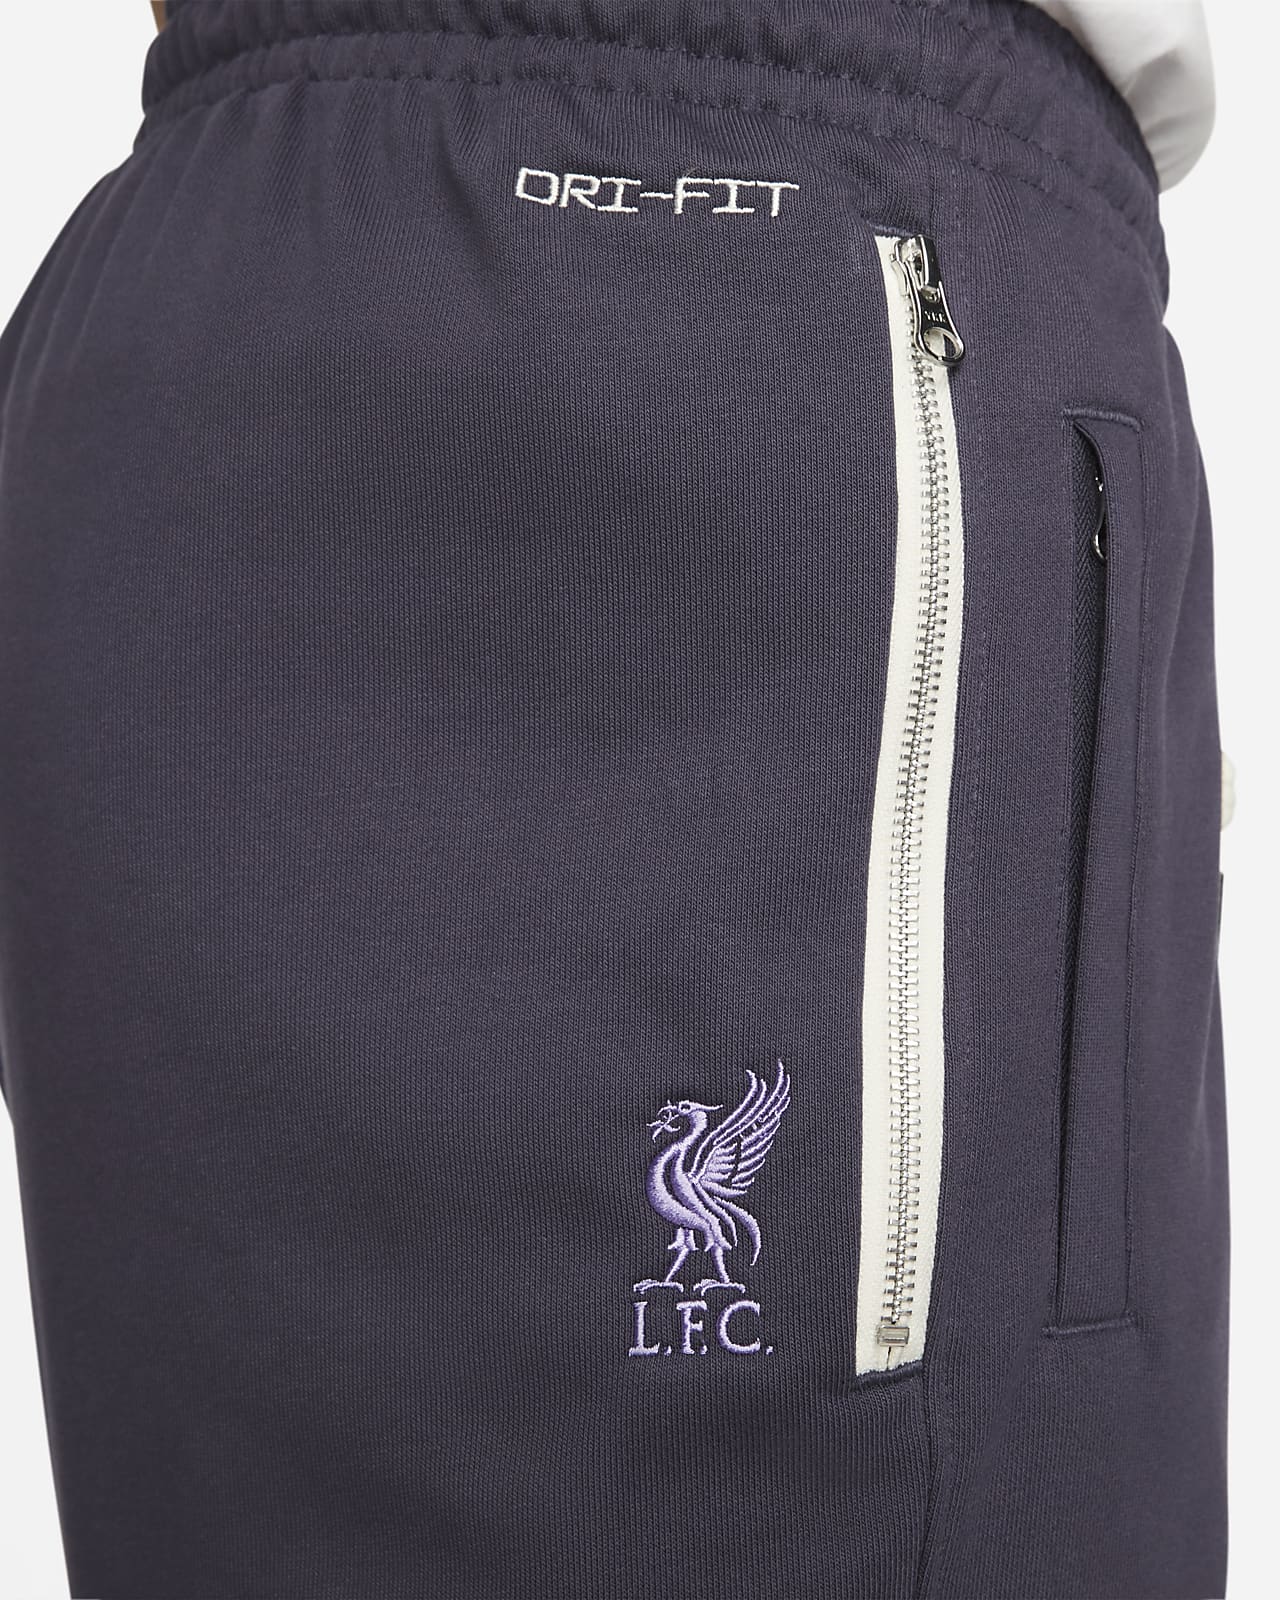 Liverpool FC Standard Issue Men's Nike Soccer Pants.